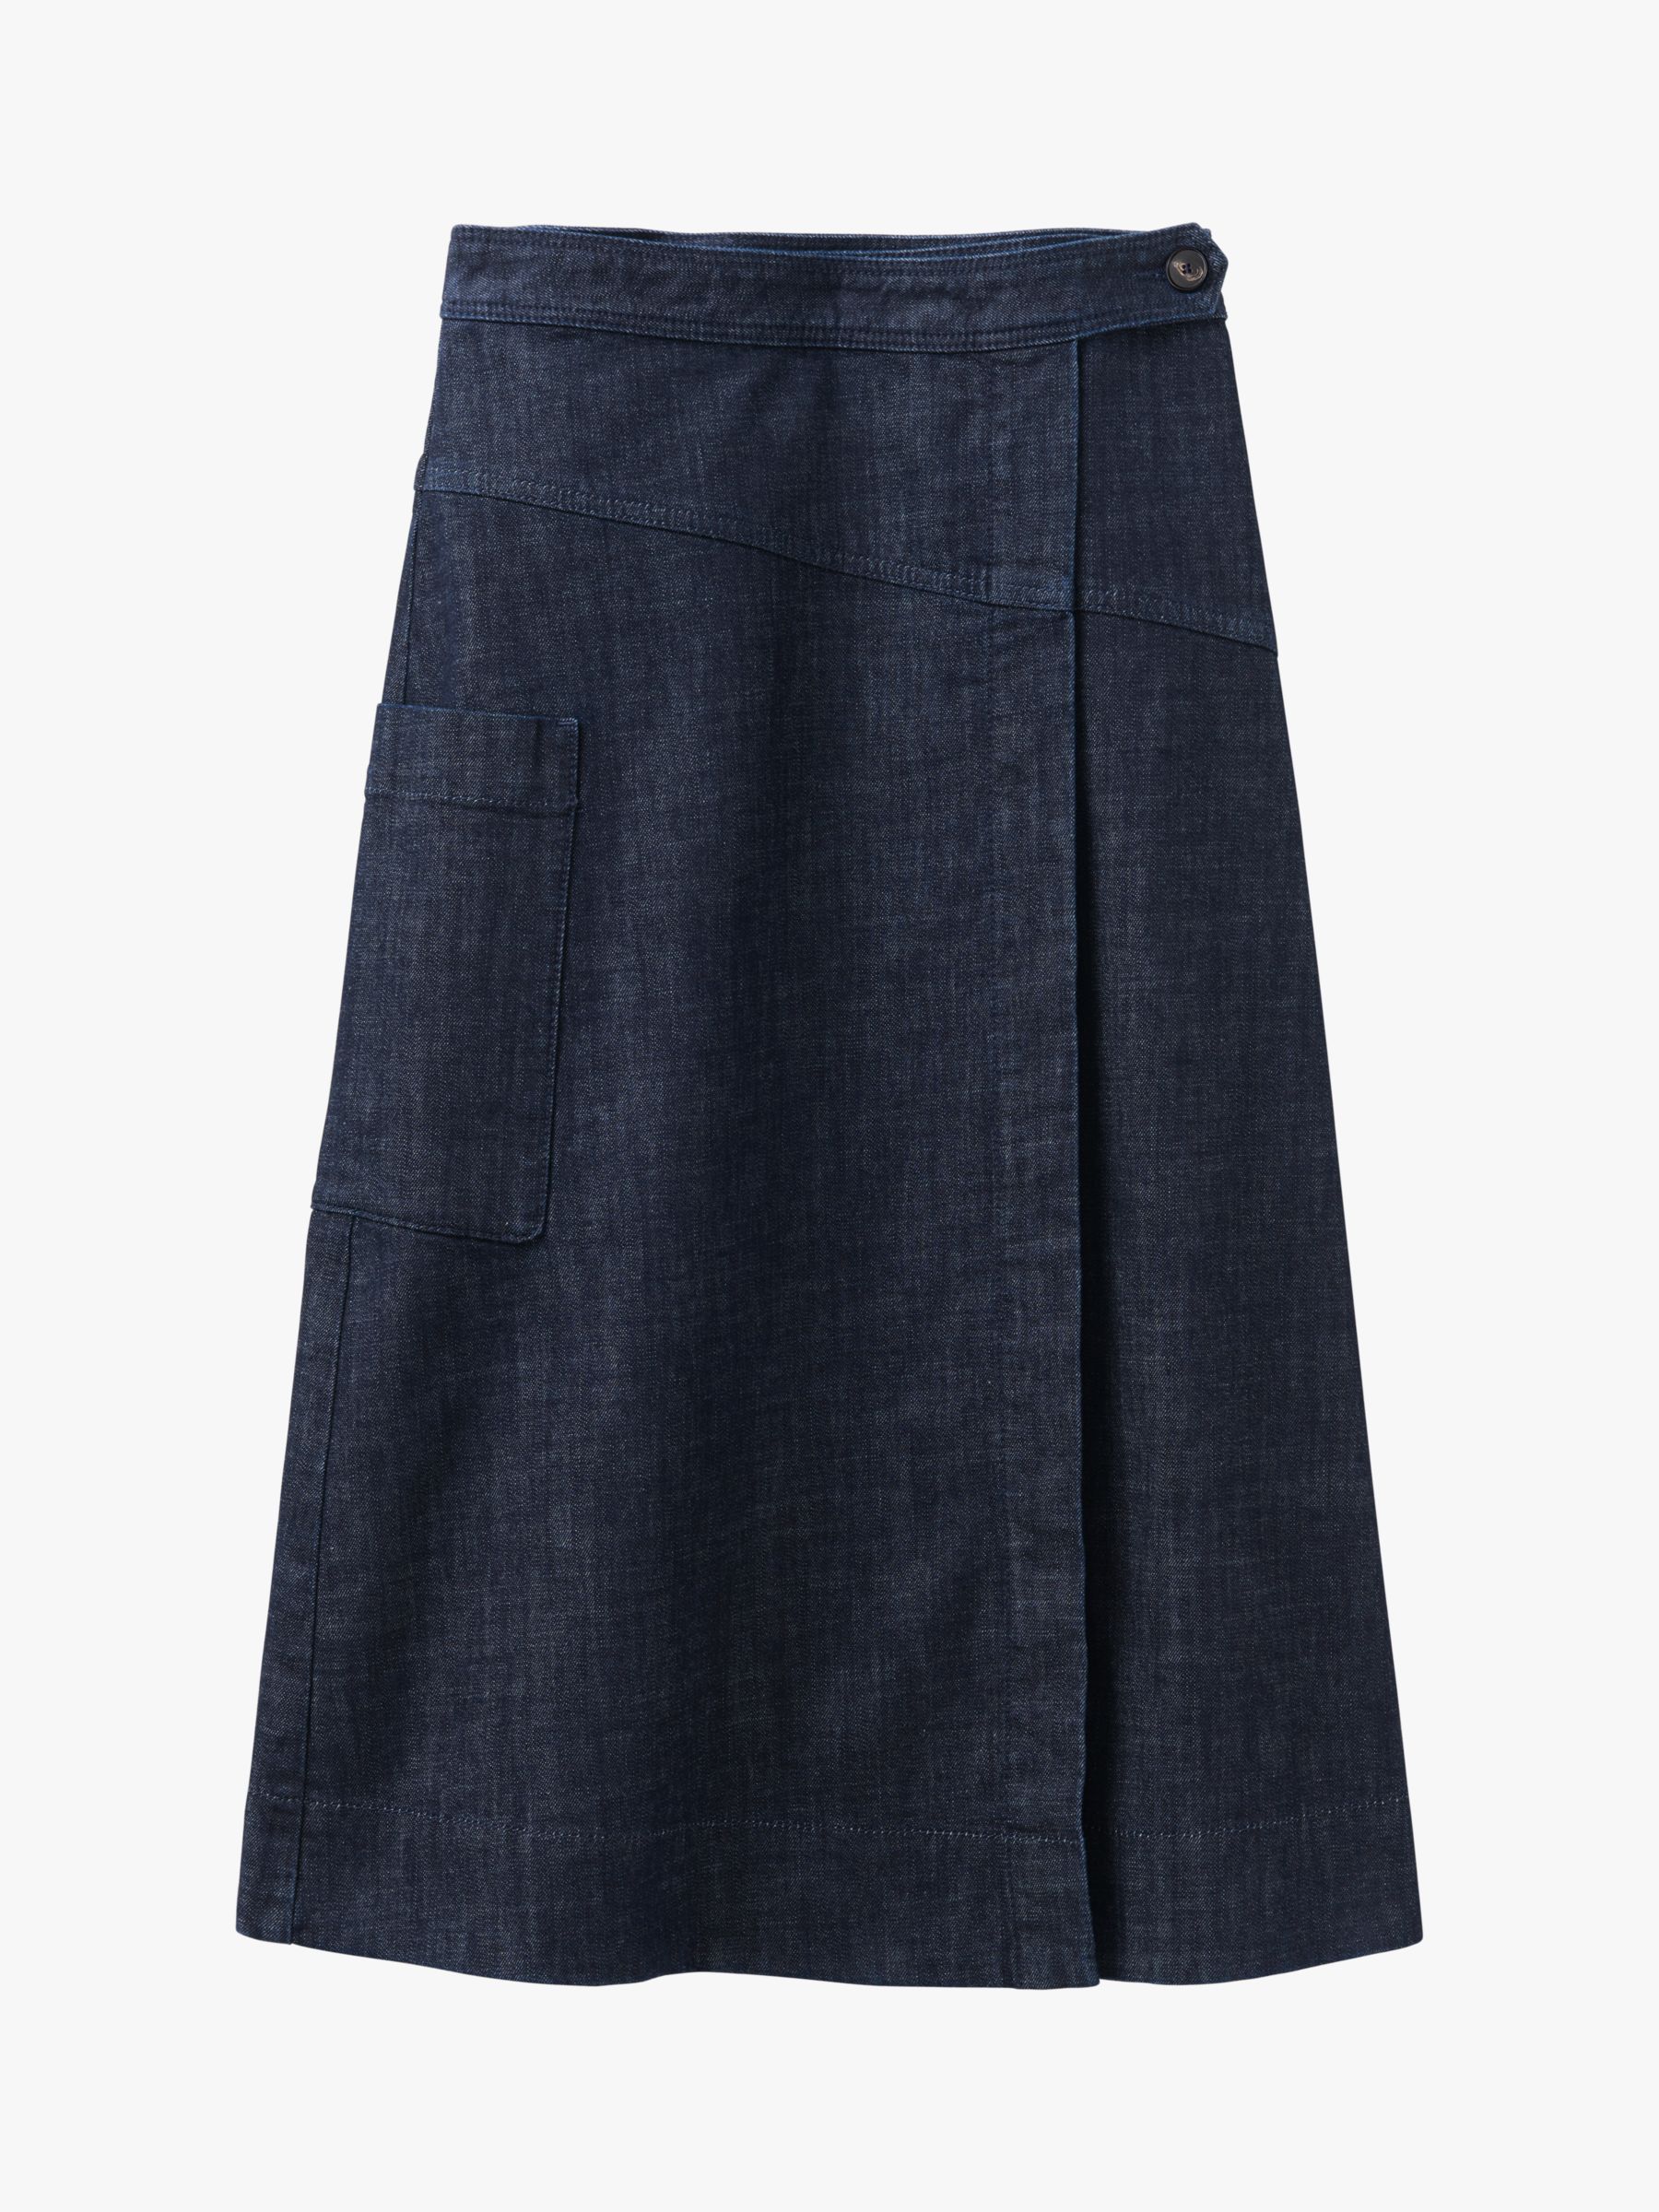 Toast Denim Wrap Skirt, Indigo at John Lewis & Partners